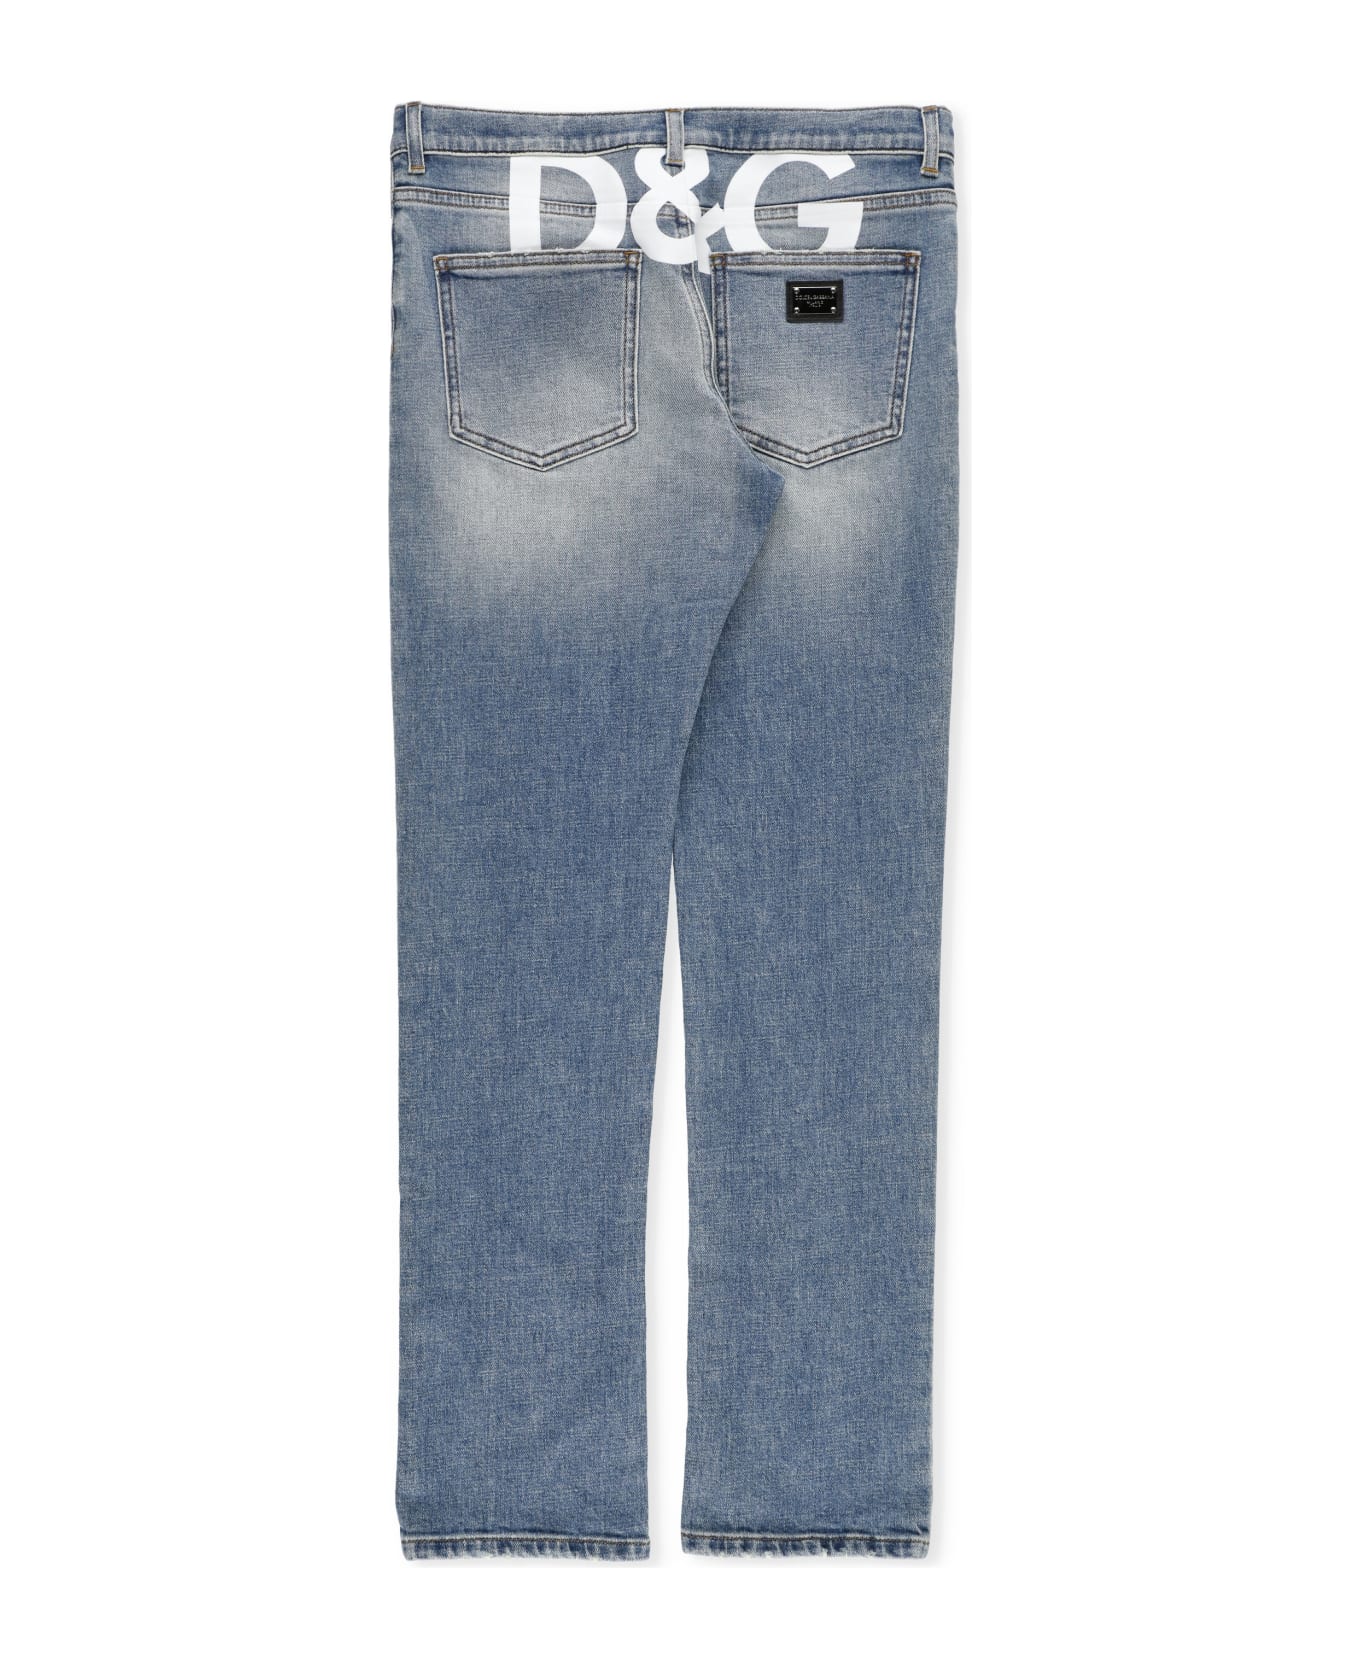 Dolce & Gabbana Logoed Jeans - Light Blue